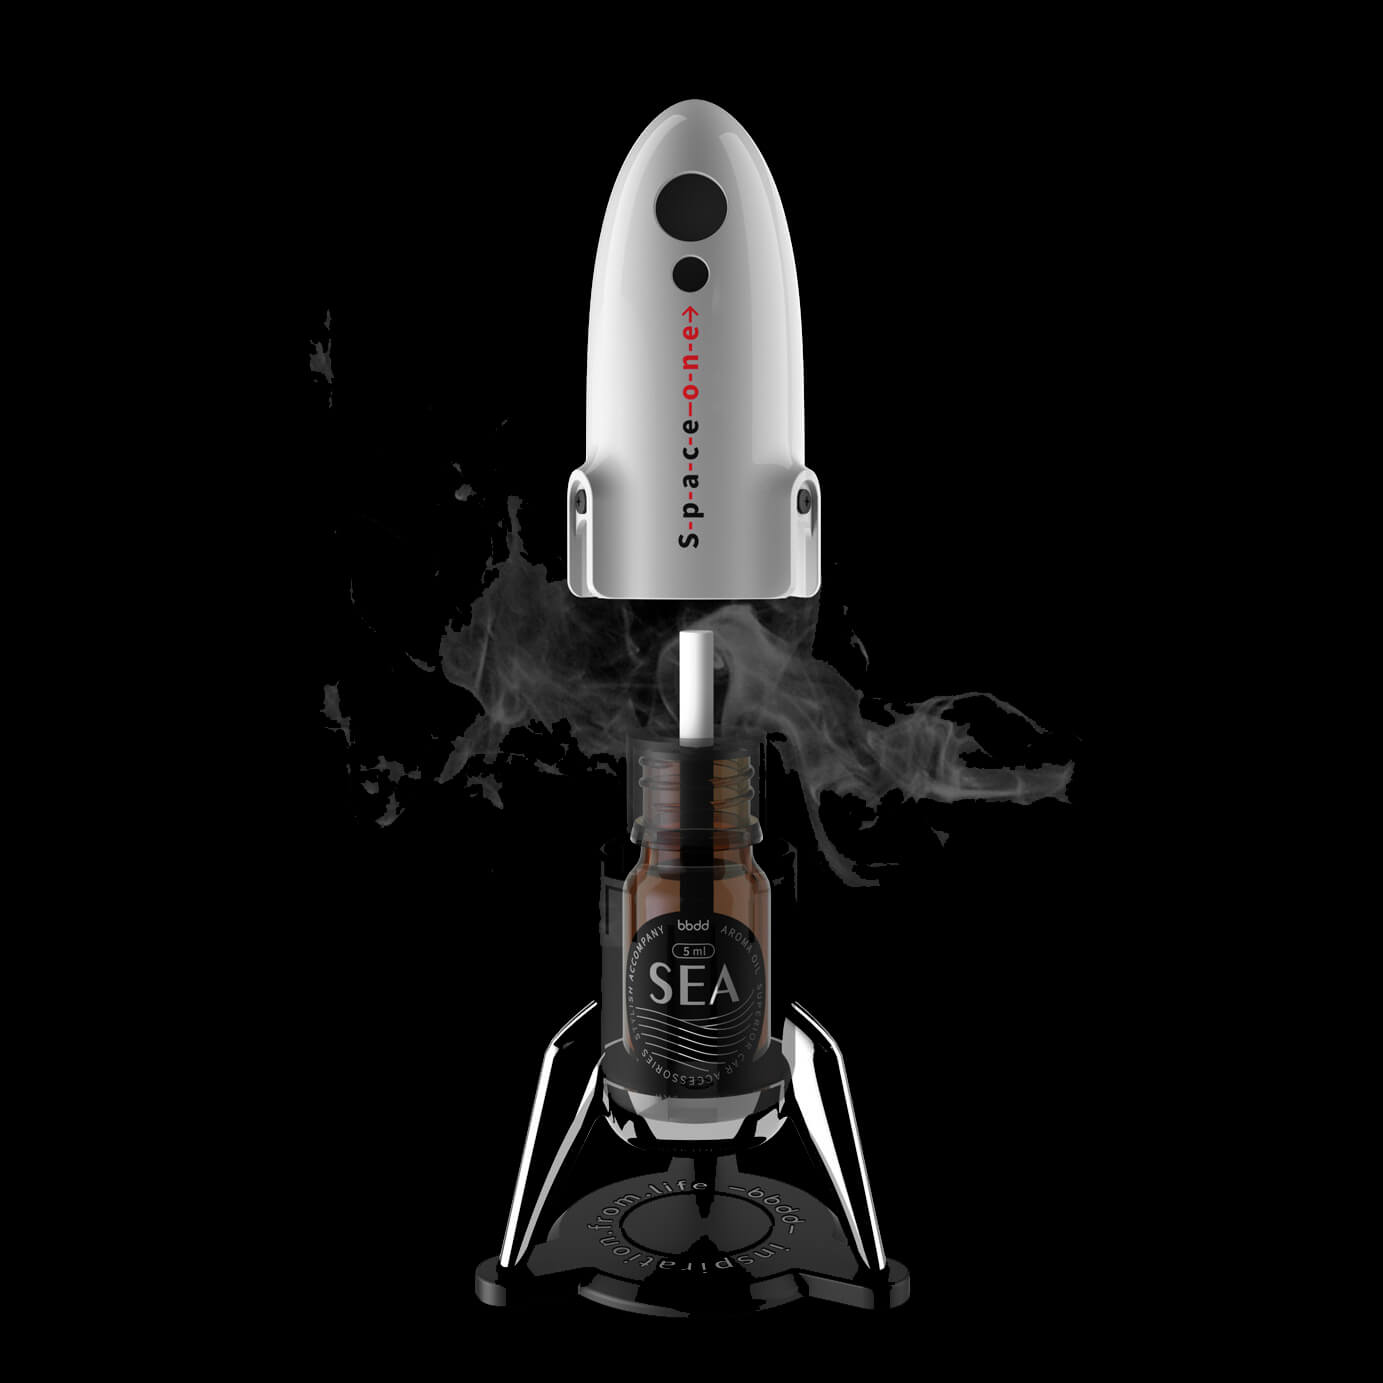 EVAAM Rocket Shaped Air Freshener for Tesla Accessories - EVAAM